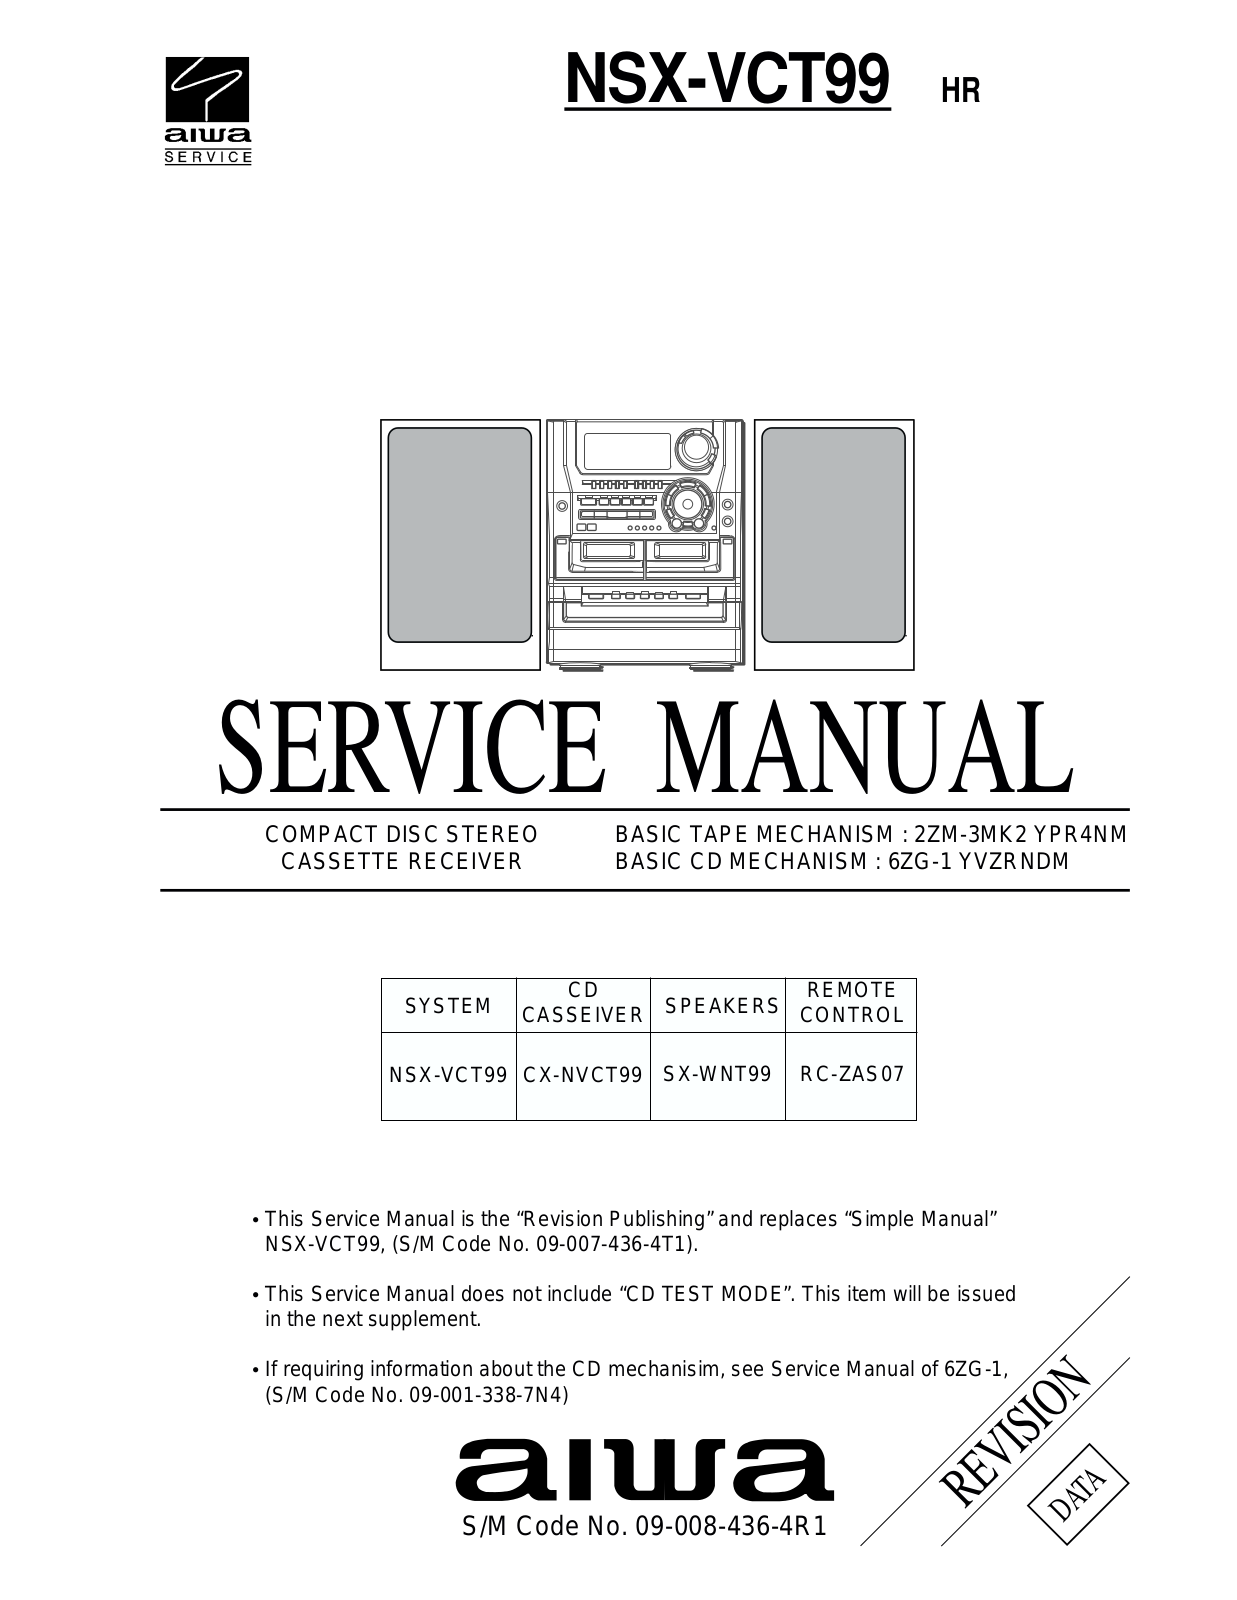 Aiwa NSX-VCT99 Service Manual